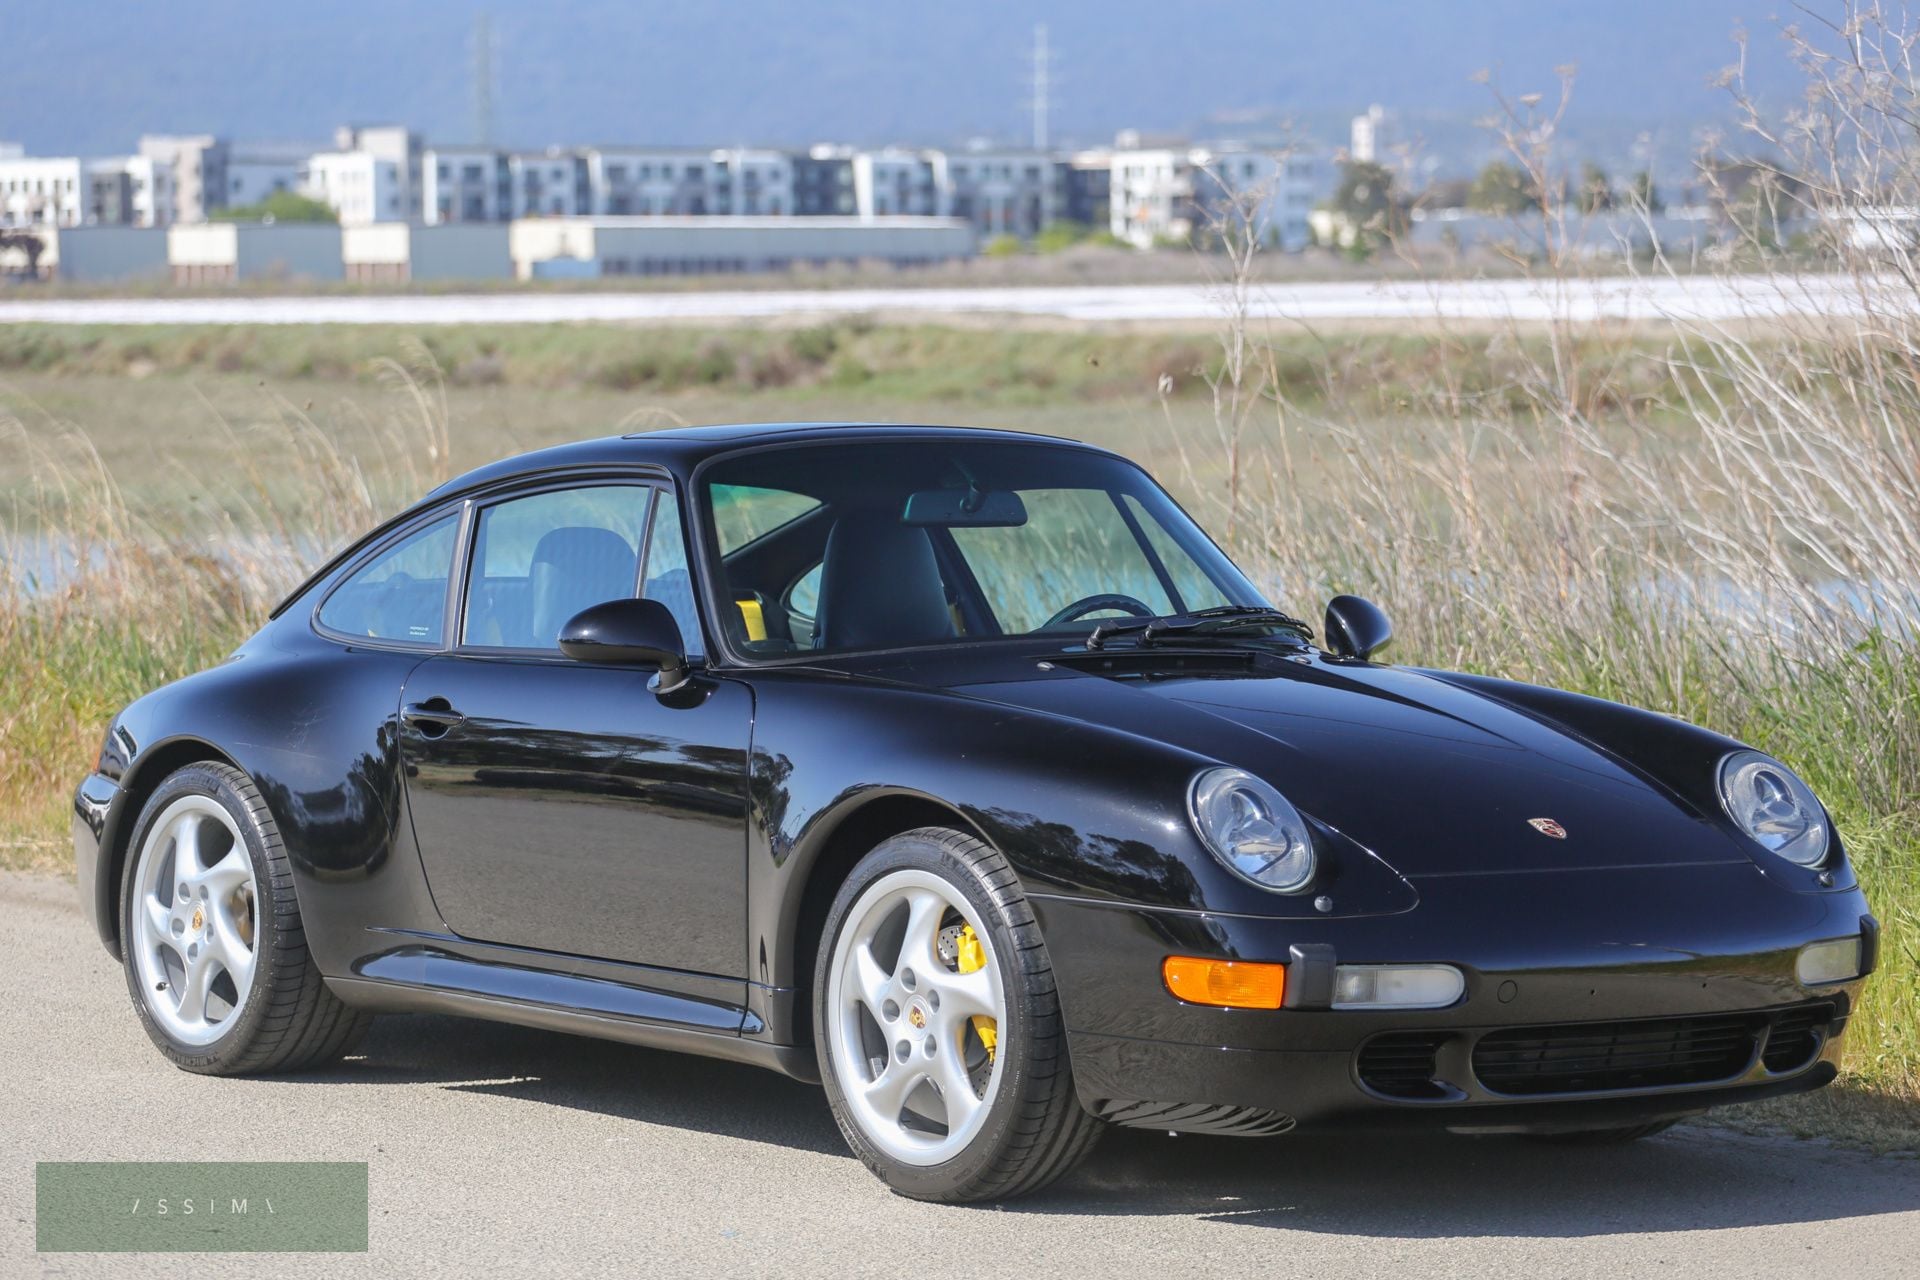 1996 Porsche 911 - 1998 Porsche 911 C2S - Former Seinfeld Car - Final U.S. 993 - Used - VIN WP0AA2998WS321327 - 6,231 Miles - 6 cyl - 2WD - Automatic - Sedan - Black - Redwood City, CA 94063, United States